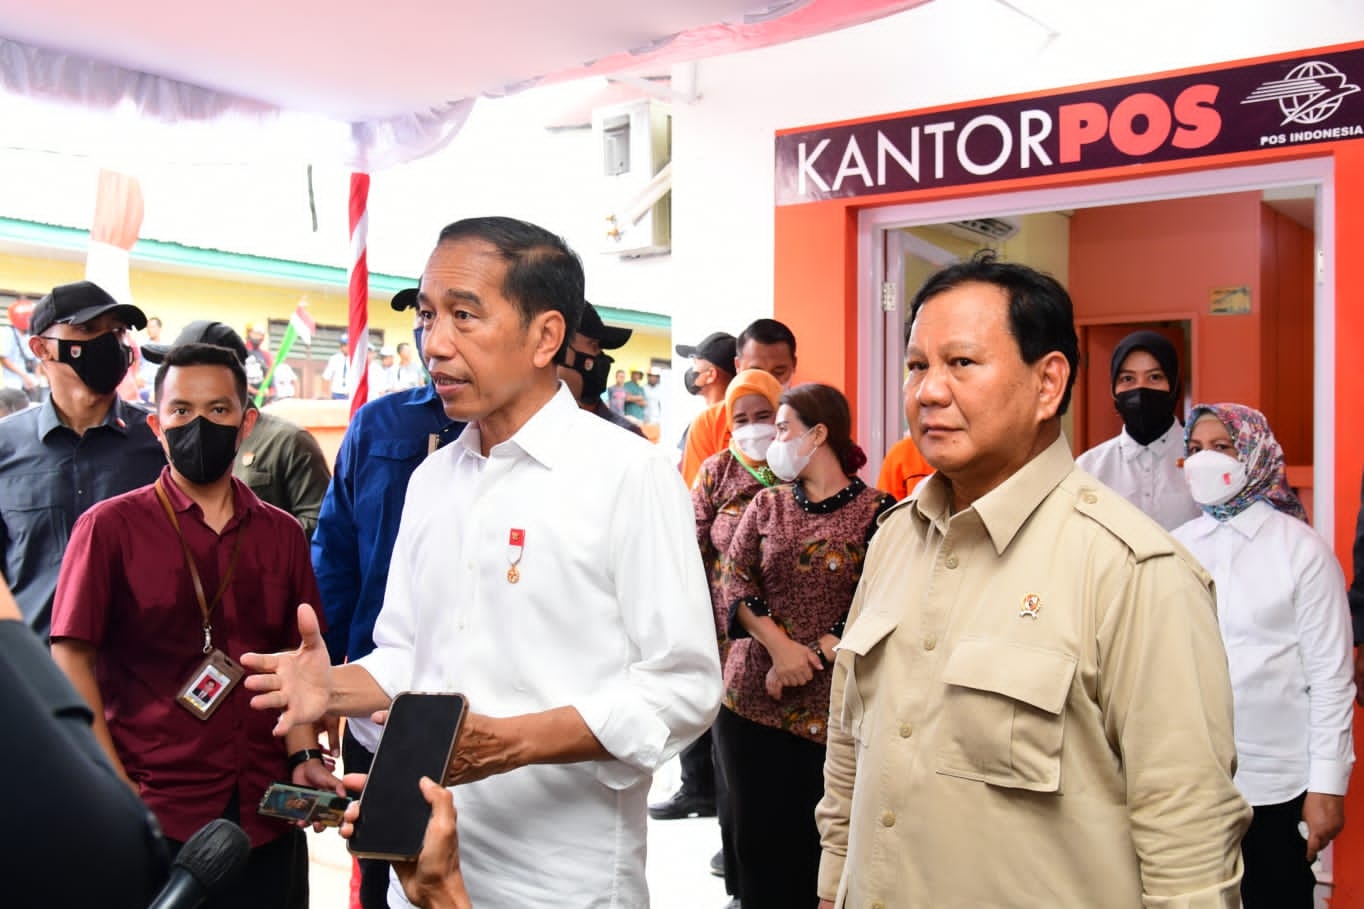 Presiden Jokowi Tinjau Penyerahan Bantuan Sosial di Kantor Pos Kepulauan Aru